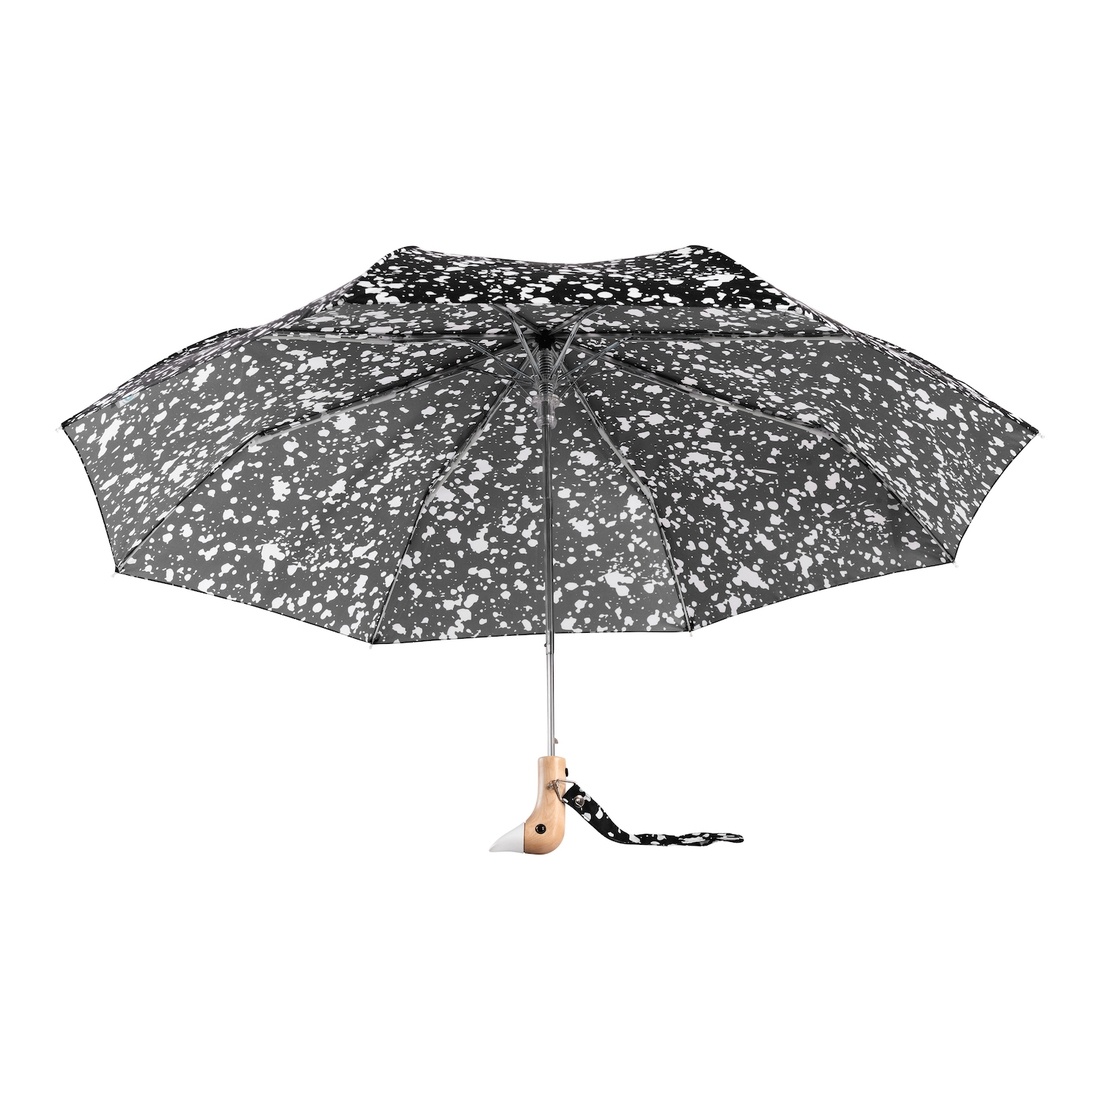 Original Duckhead Compact Umbrella - Polkastripe